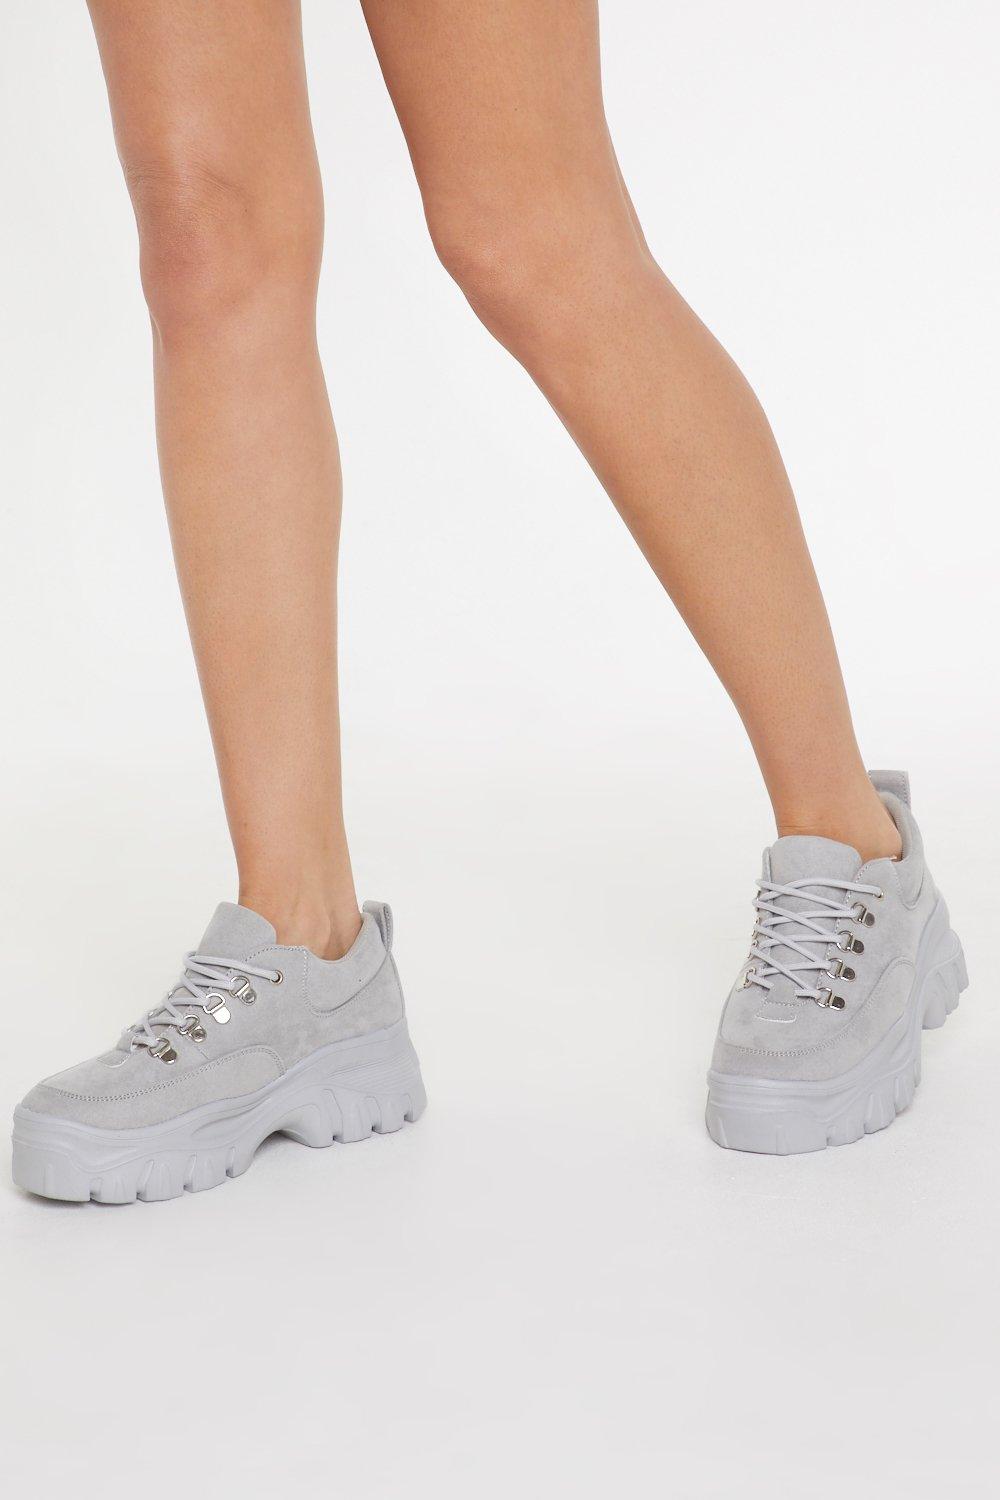 chunky sneakers grey